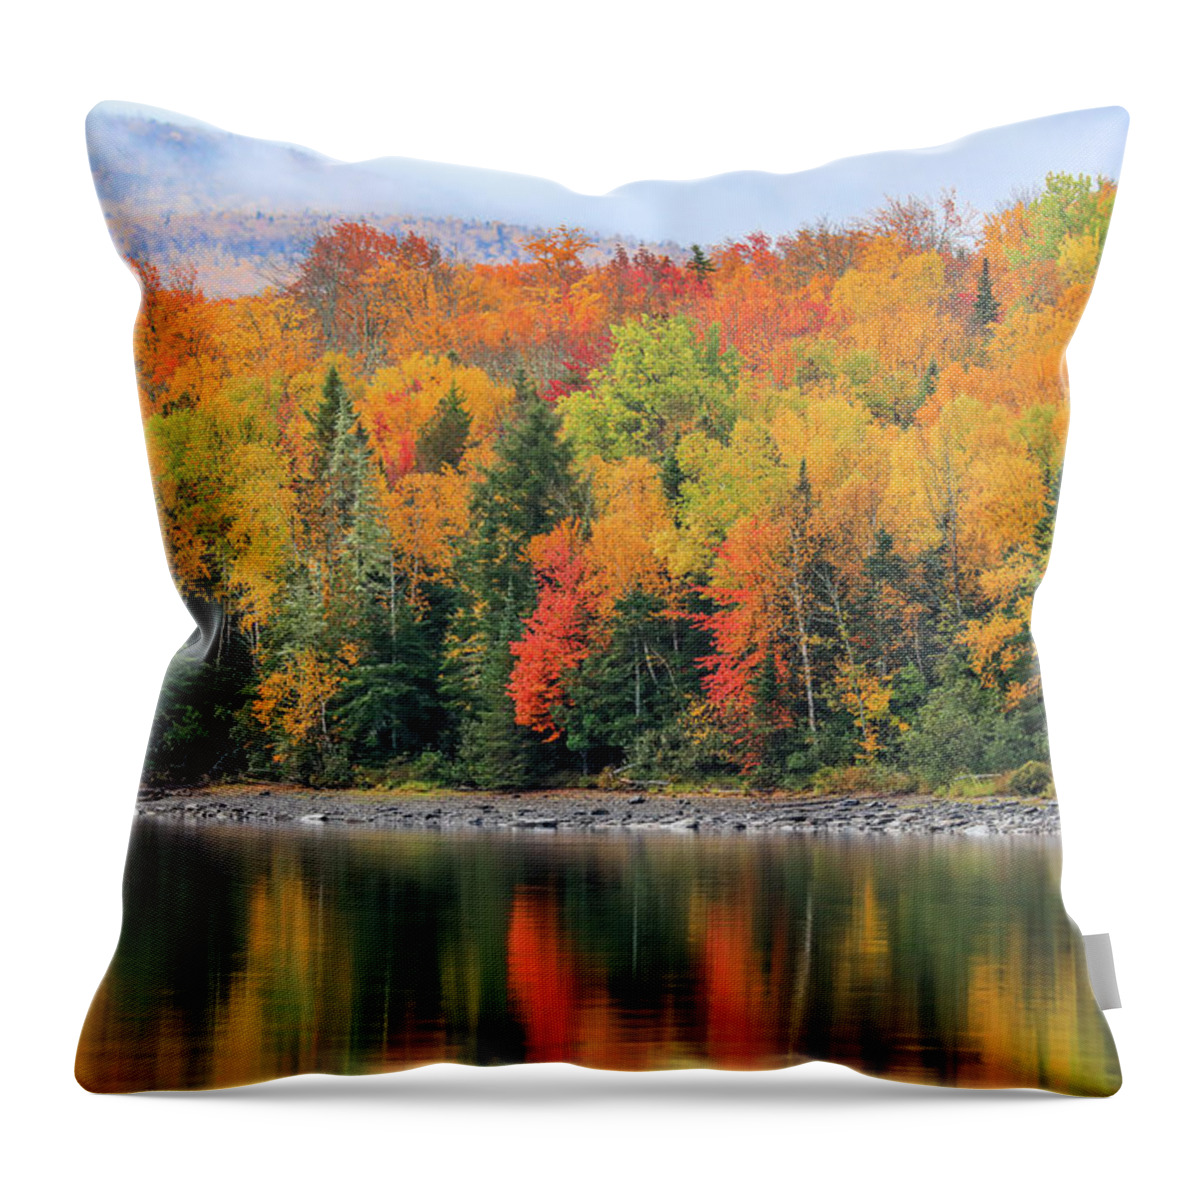 Kokadjo Maine Throw Pillow featuring the photograph Autumn Reflections In Kokadjo by Dan Sproul